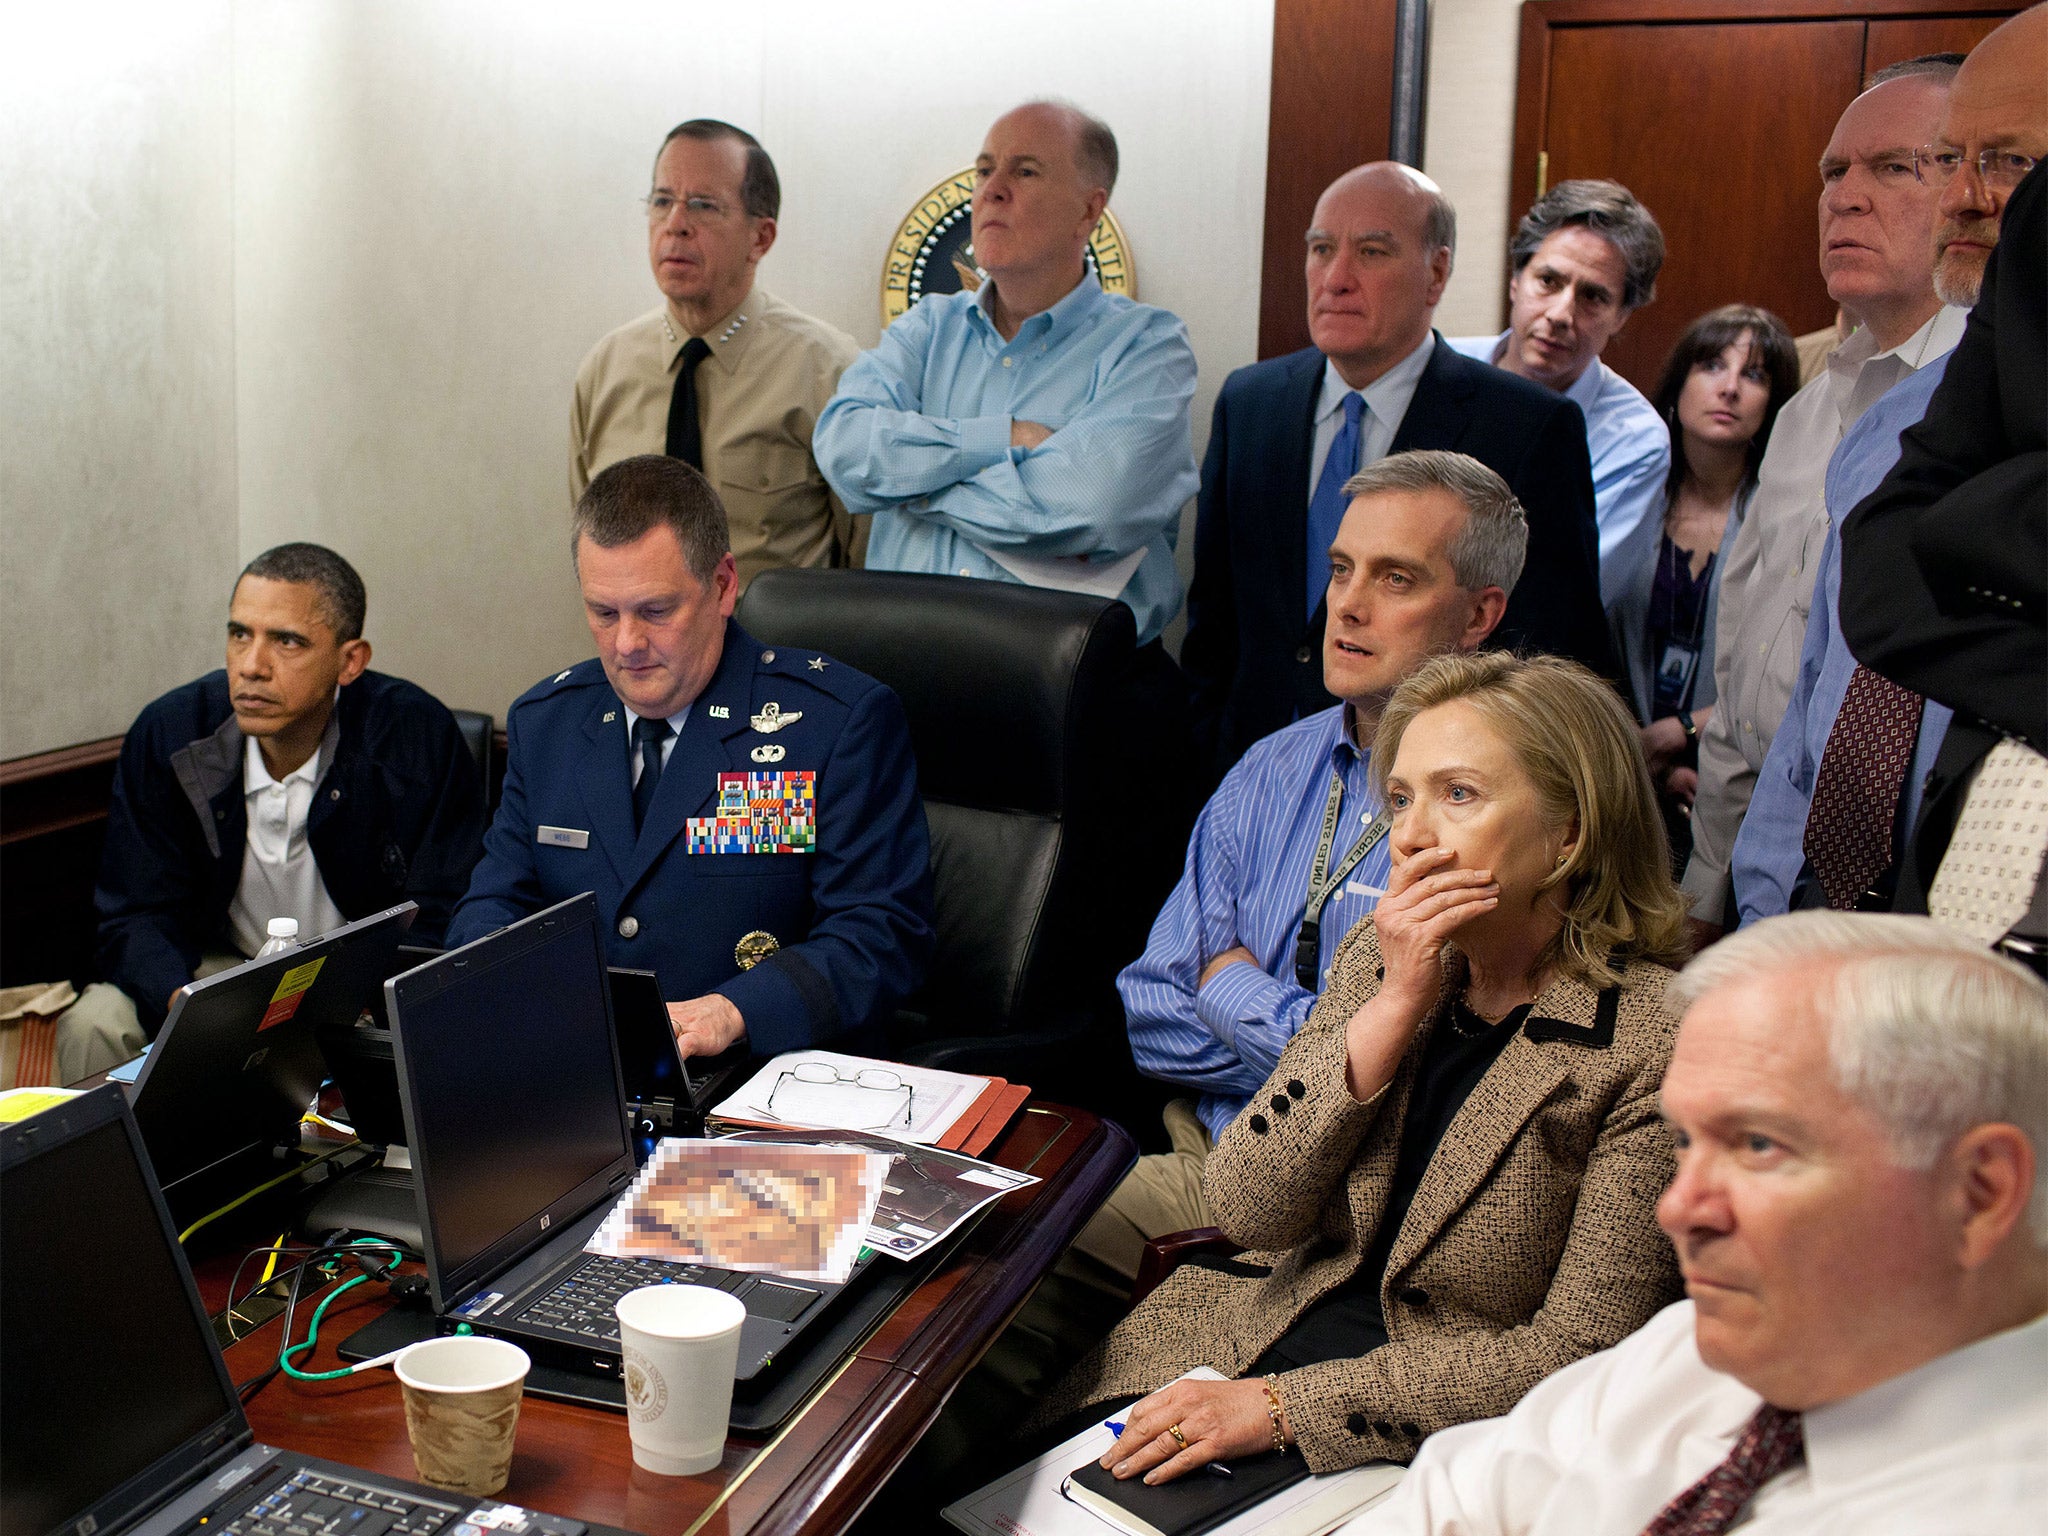 Situation abnormal: watching the Bin Laden raid